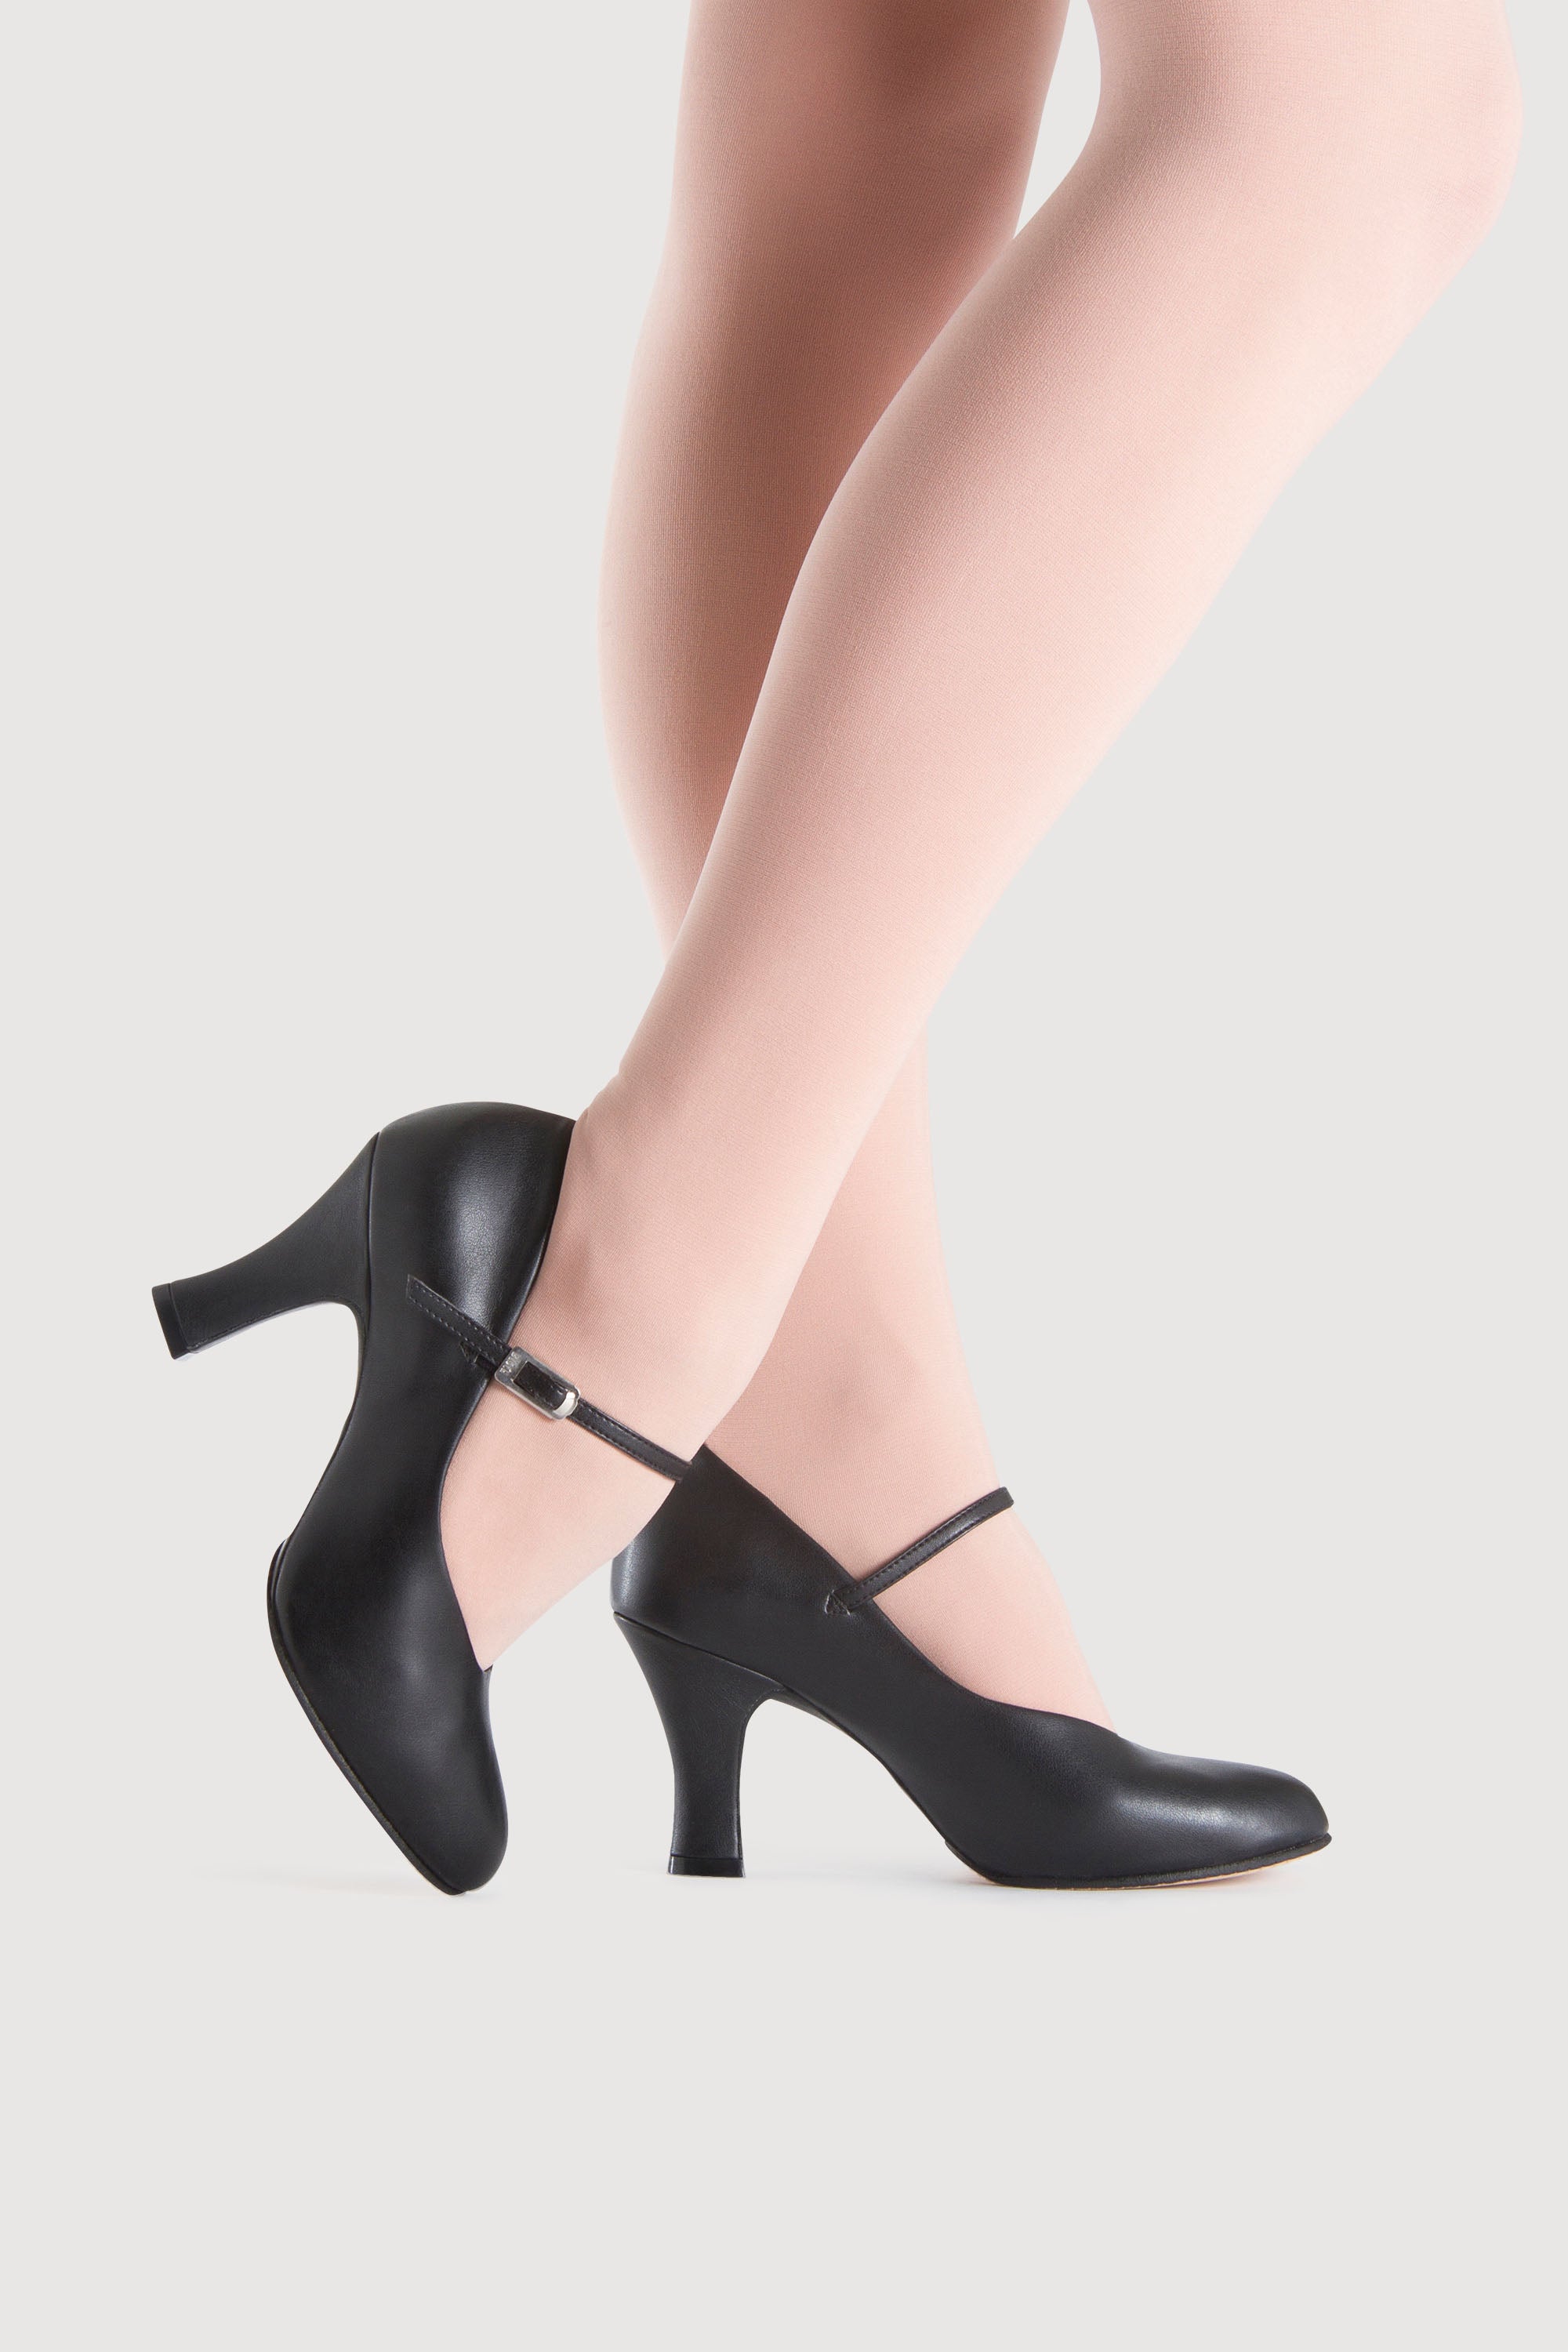 UK Size 2 Pleaser Flamingo 809 Black over Clear Pole Dancing Shoes 8 Inch  Heels | eBay